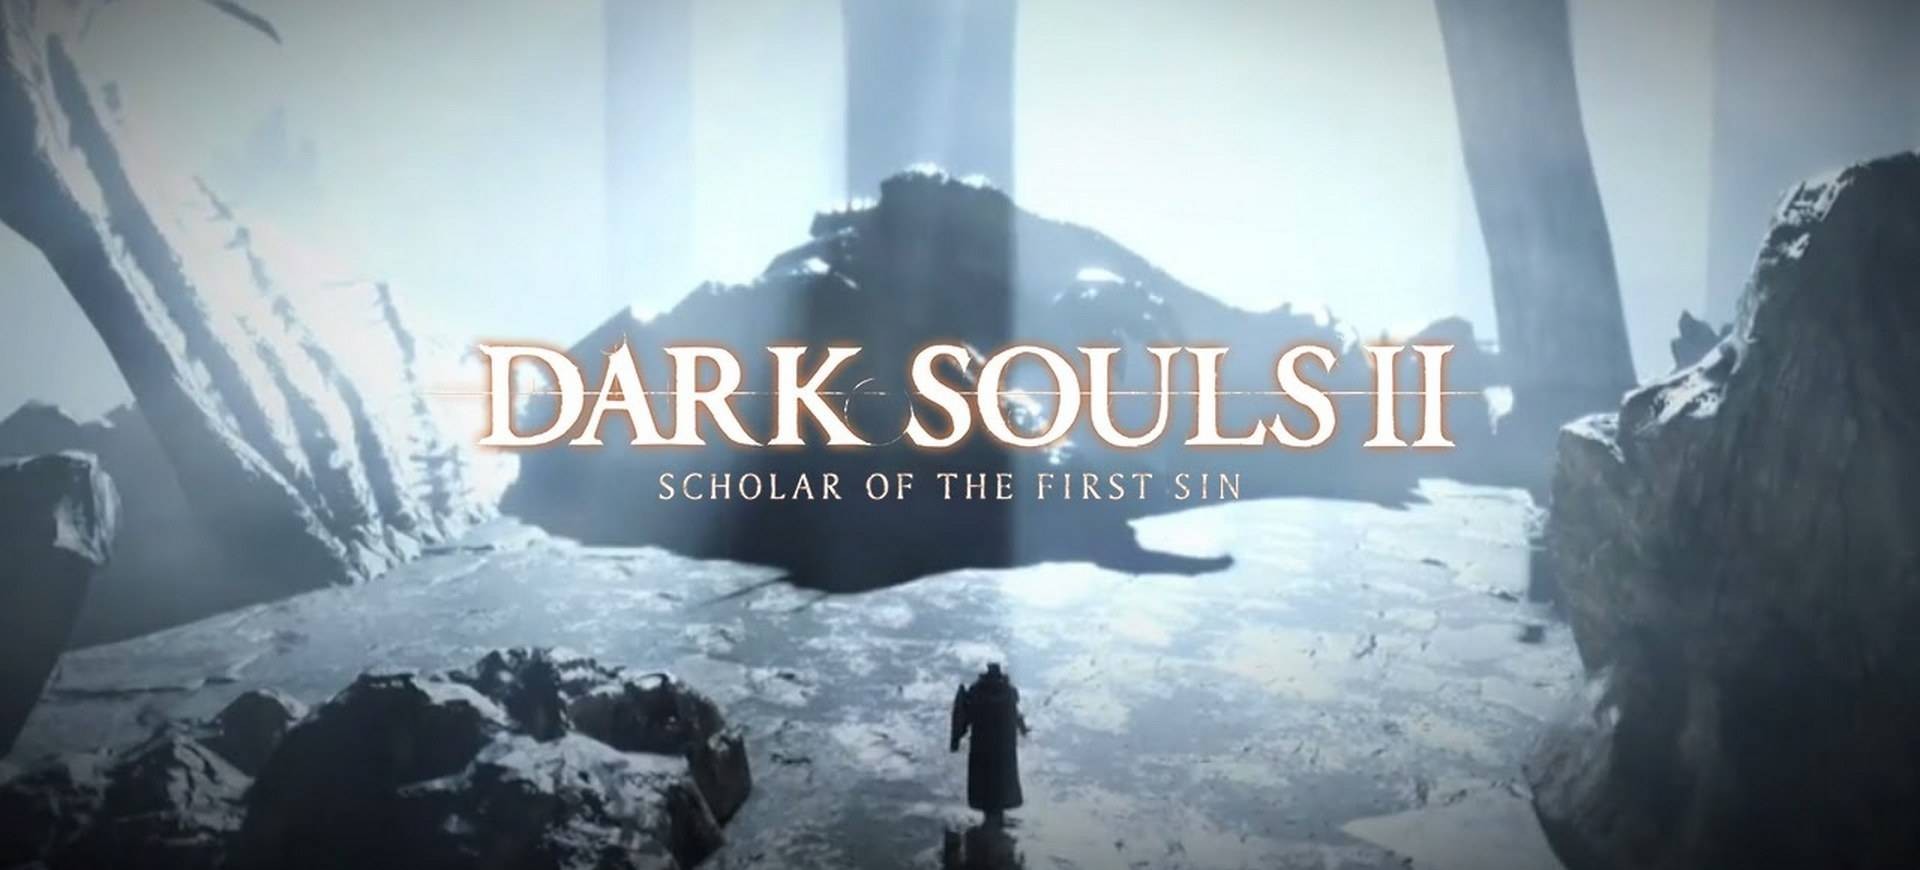 Dark Souls II: Scholar of the First Sin - Đánh Giá Game